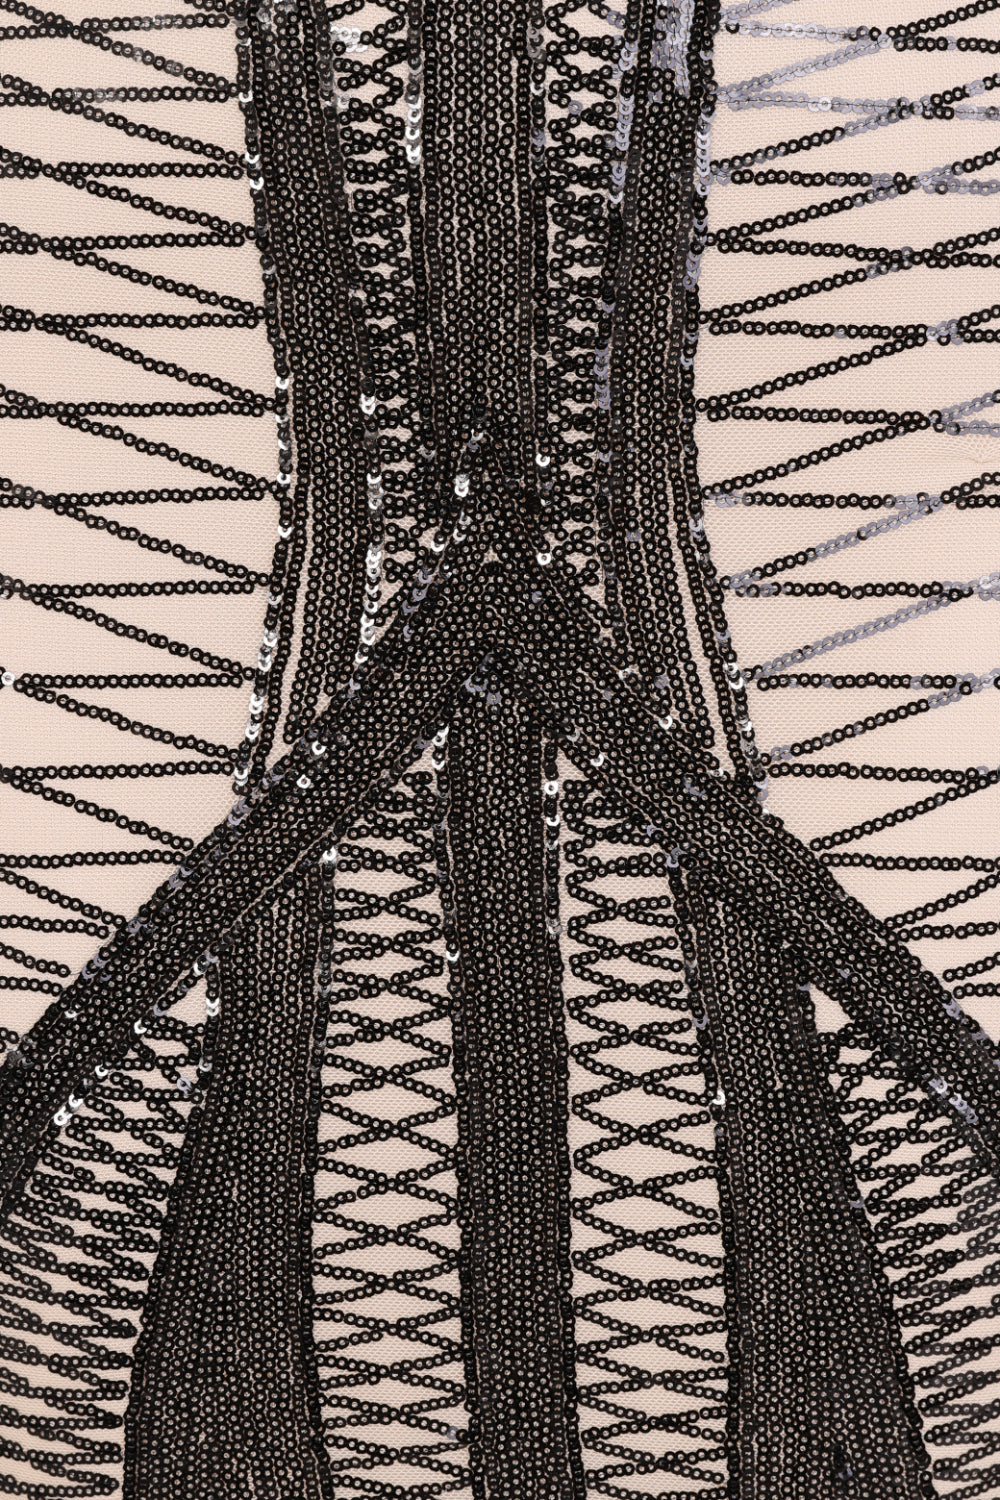 Hilton Luxe Black Nude Cage Sequin Bandage Illusion Dress